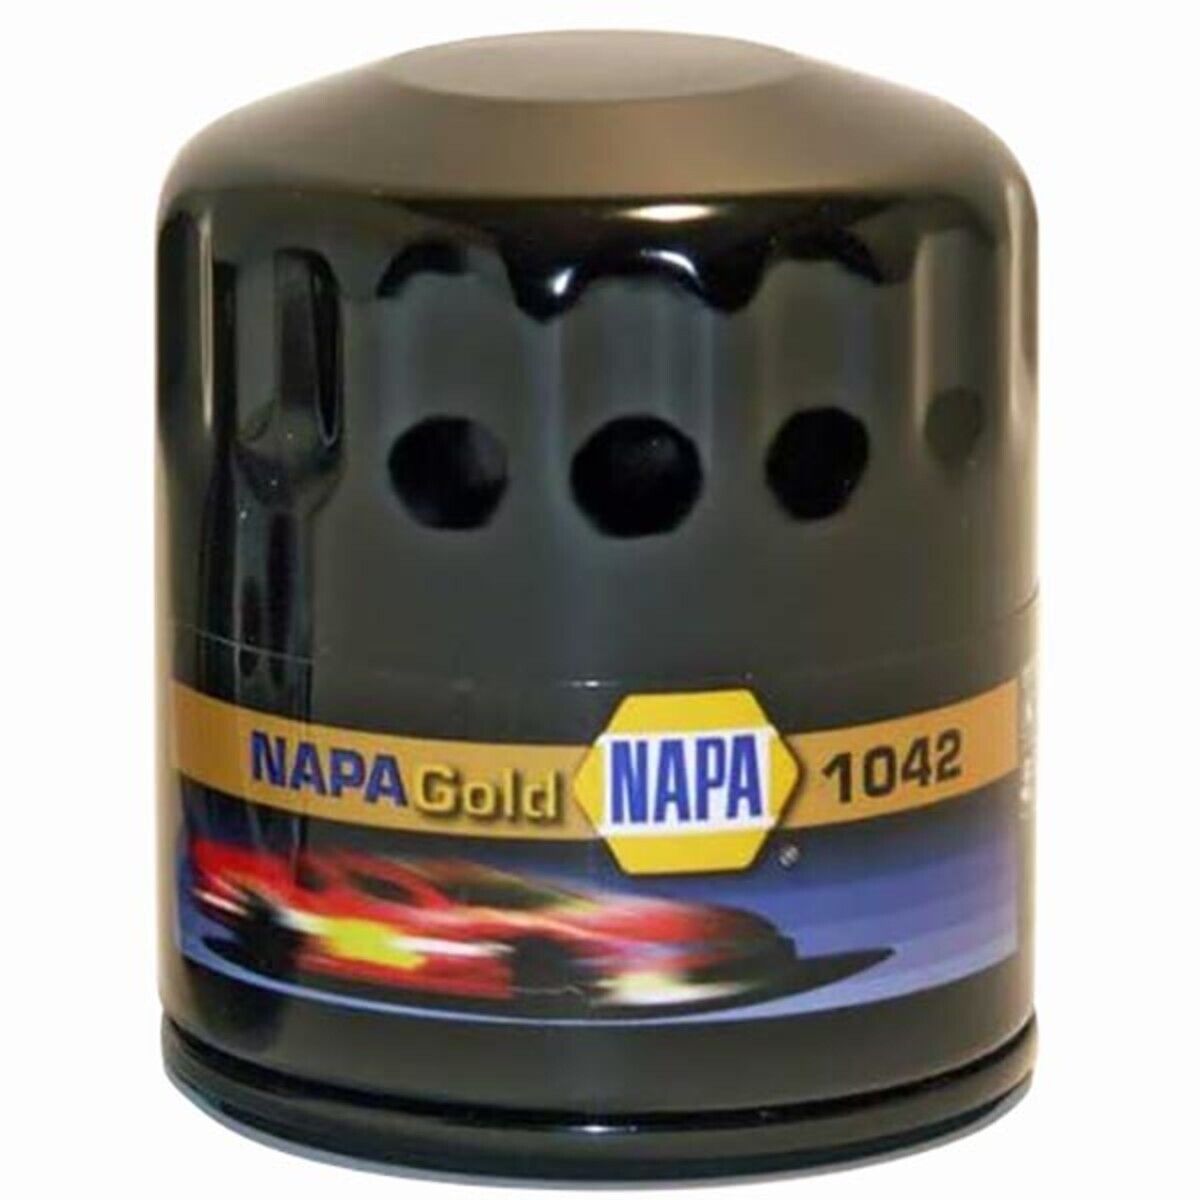 1042 Napa Gold Oil Filter for Porsche 911 Boxster Cayman 2006-2008